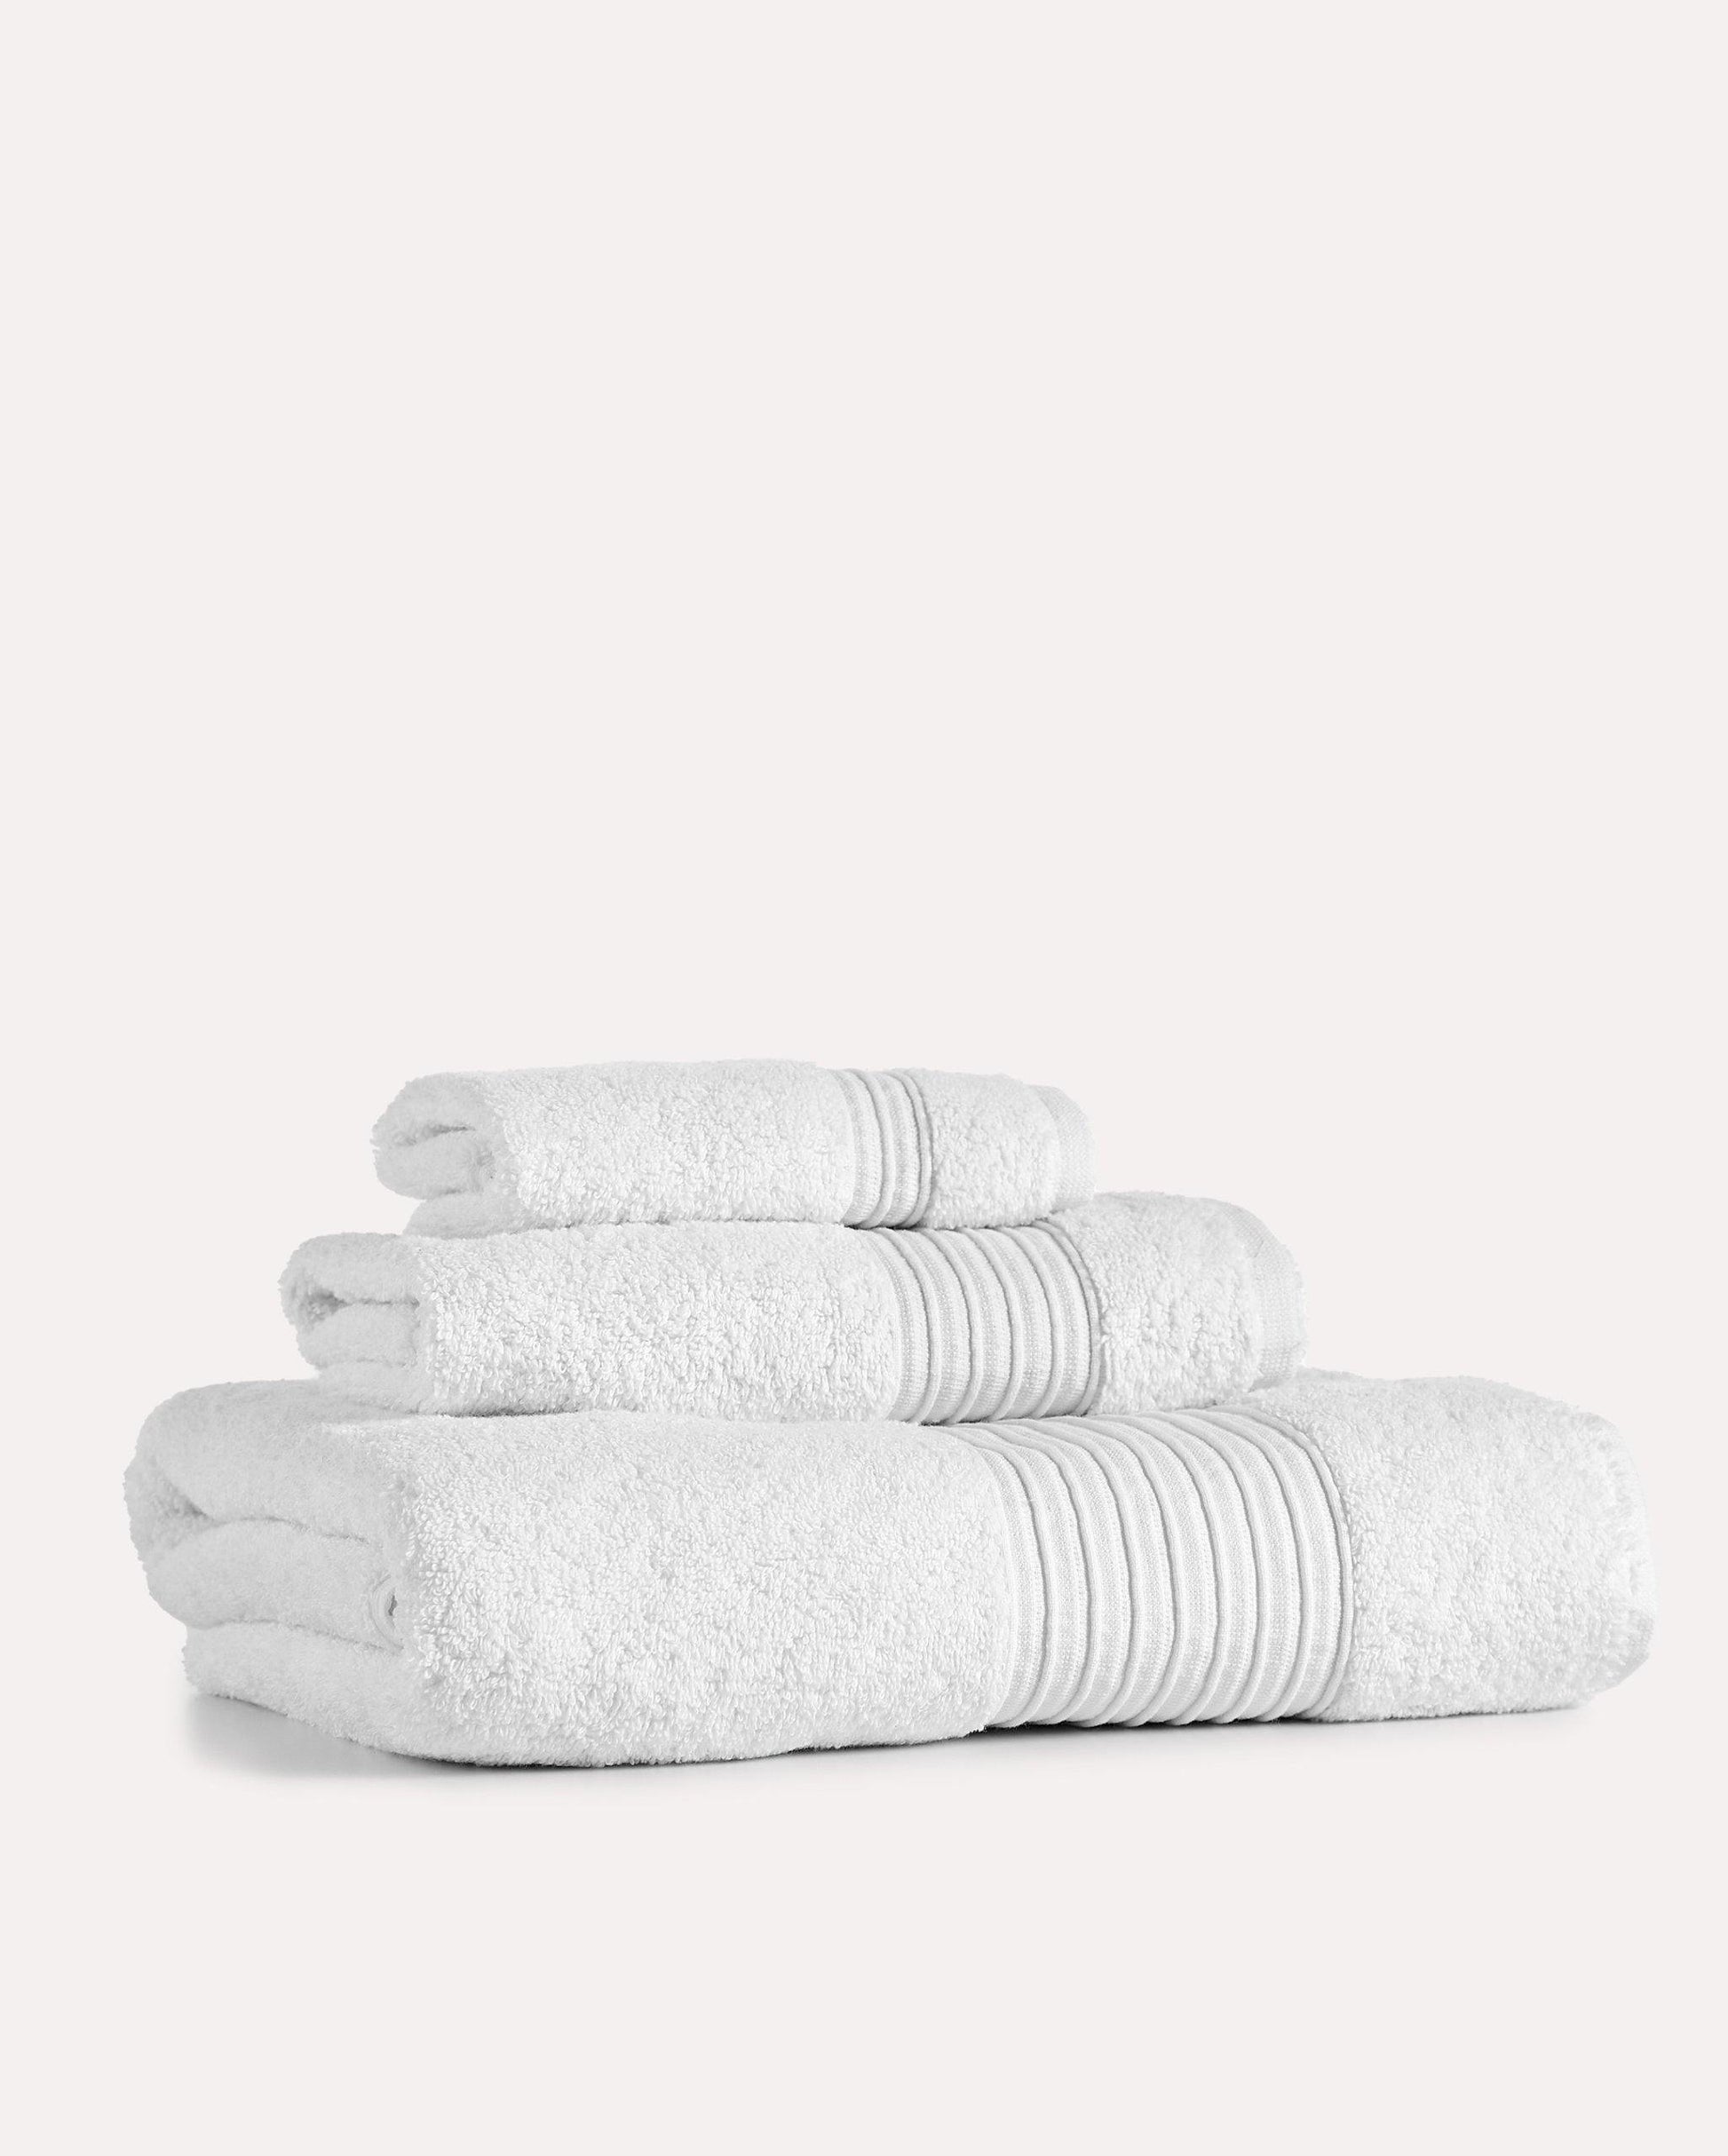 Plush Spa Cotton Towel Set 3pcs - White - Ocoza